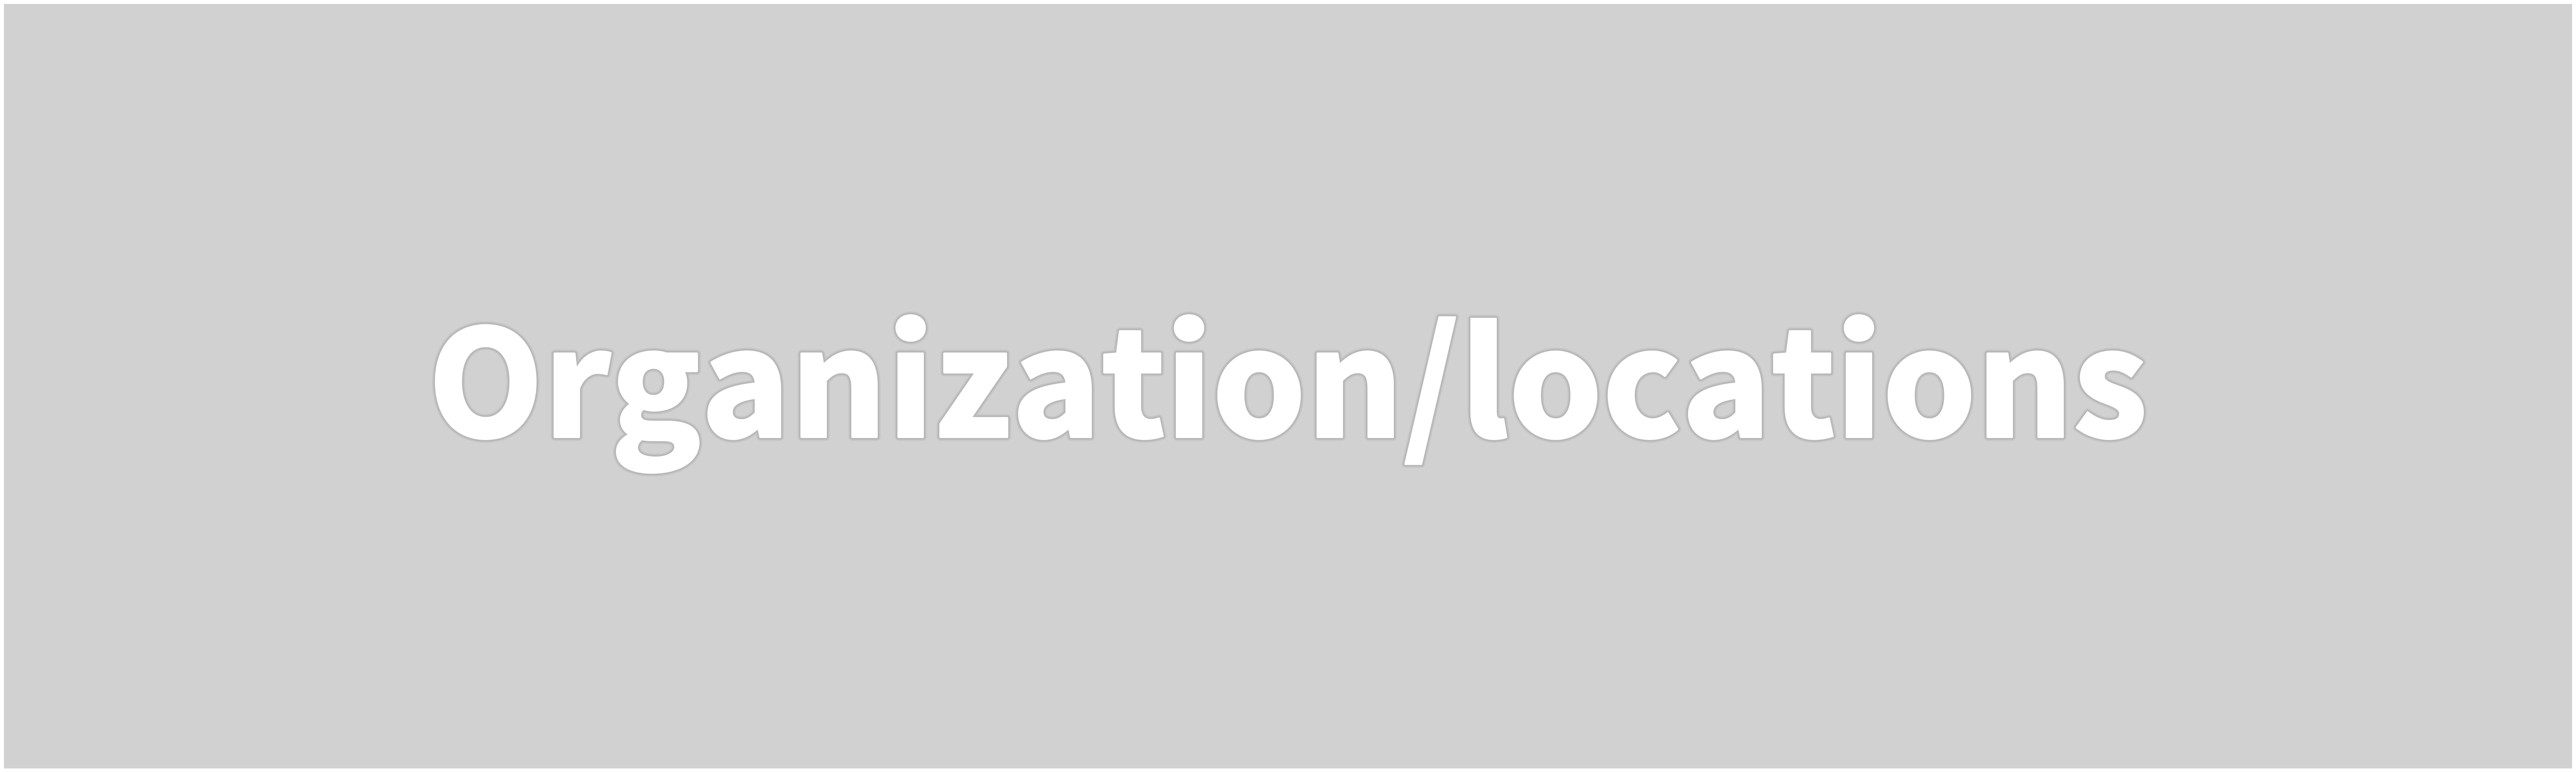 Organization/locations